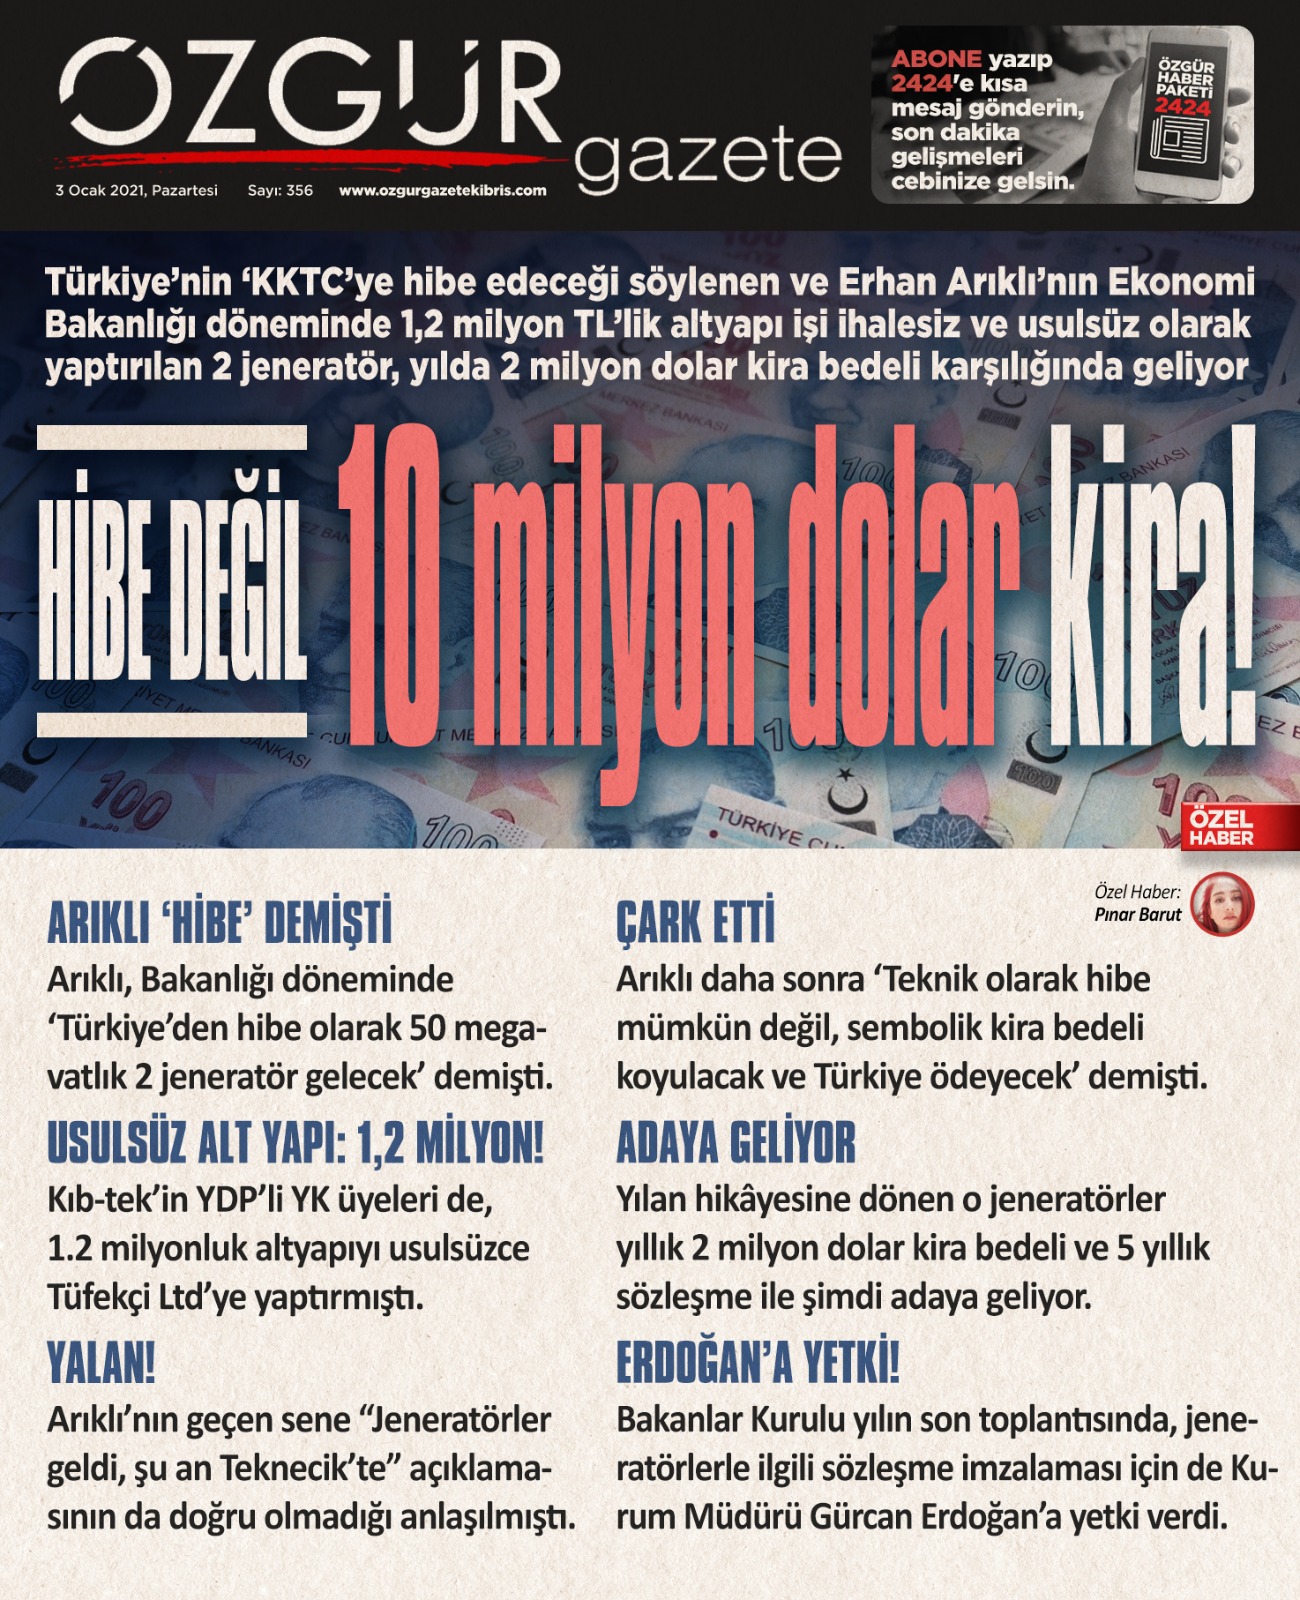 ozgur_gazete_kibris_kib_tek_jenerator_turkiye_hibe